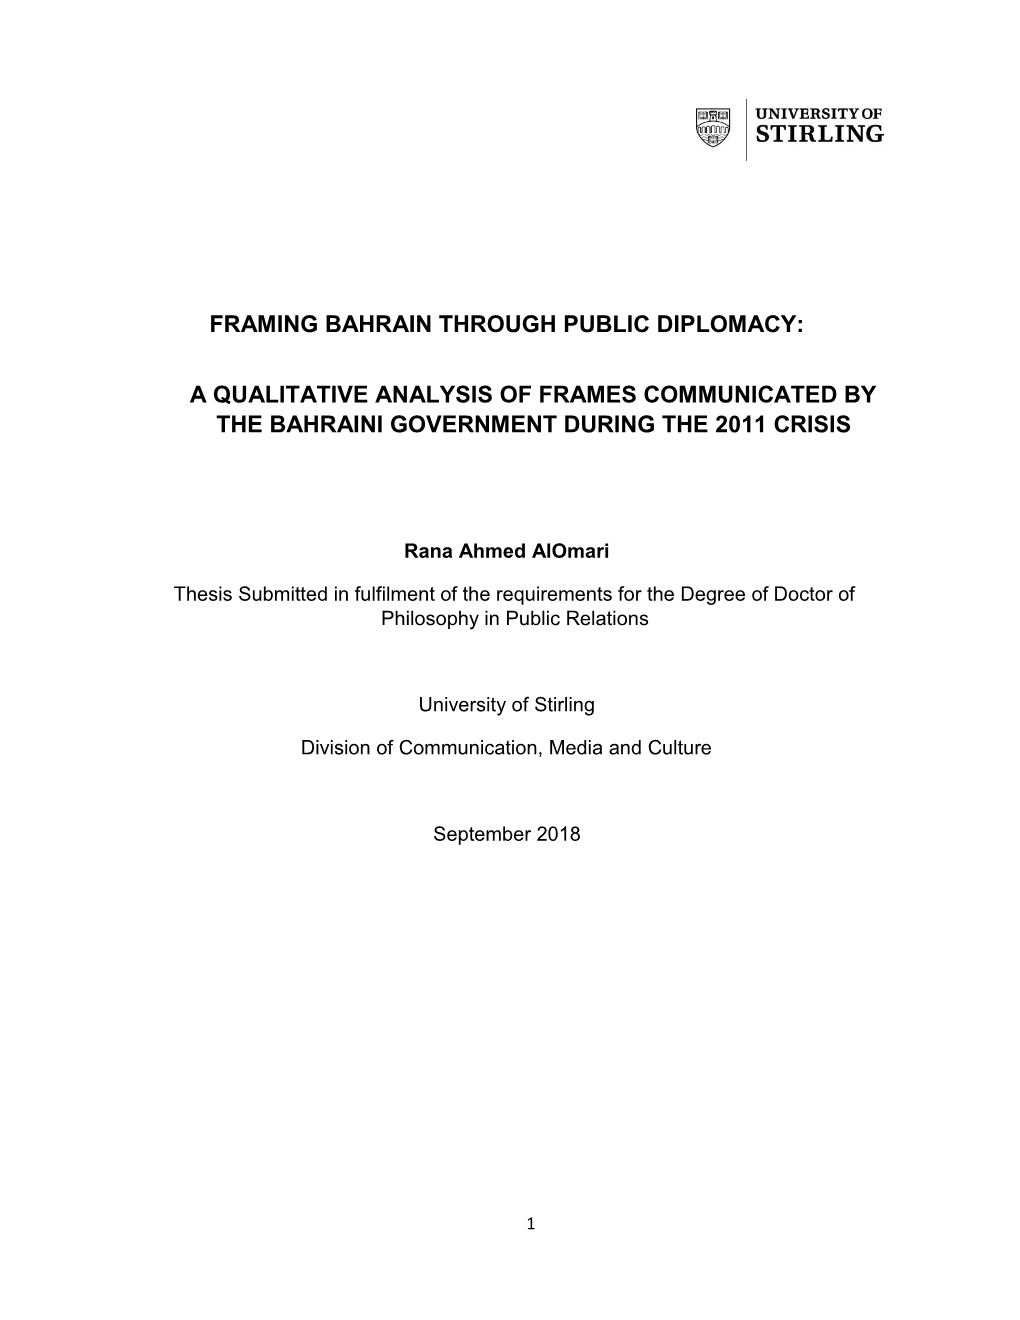 Framing Bahrain Through Public Diplomacy